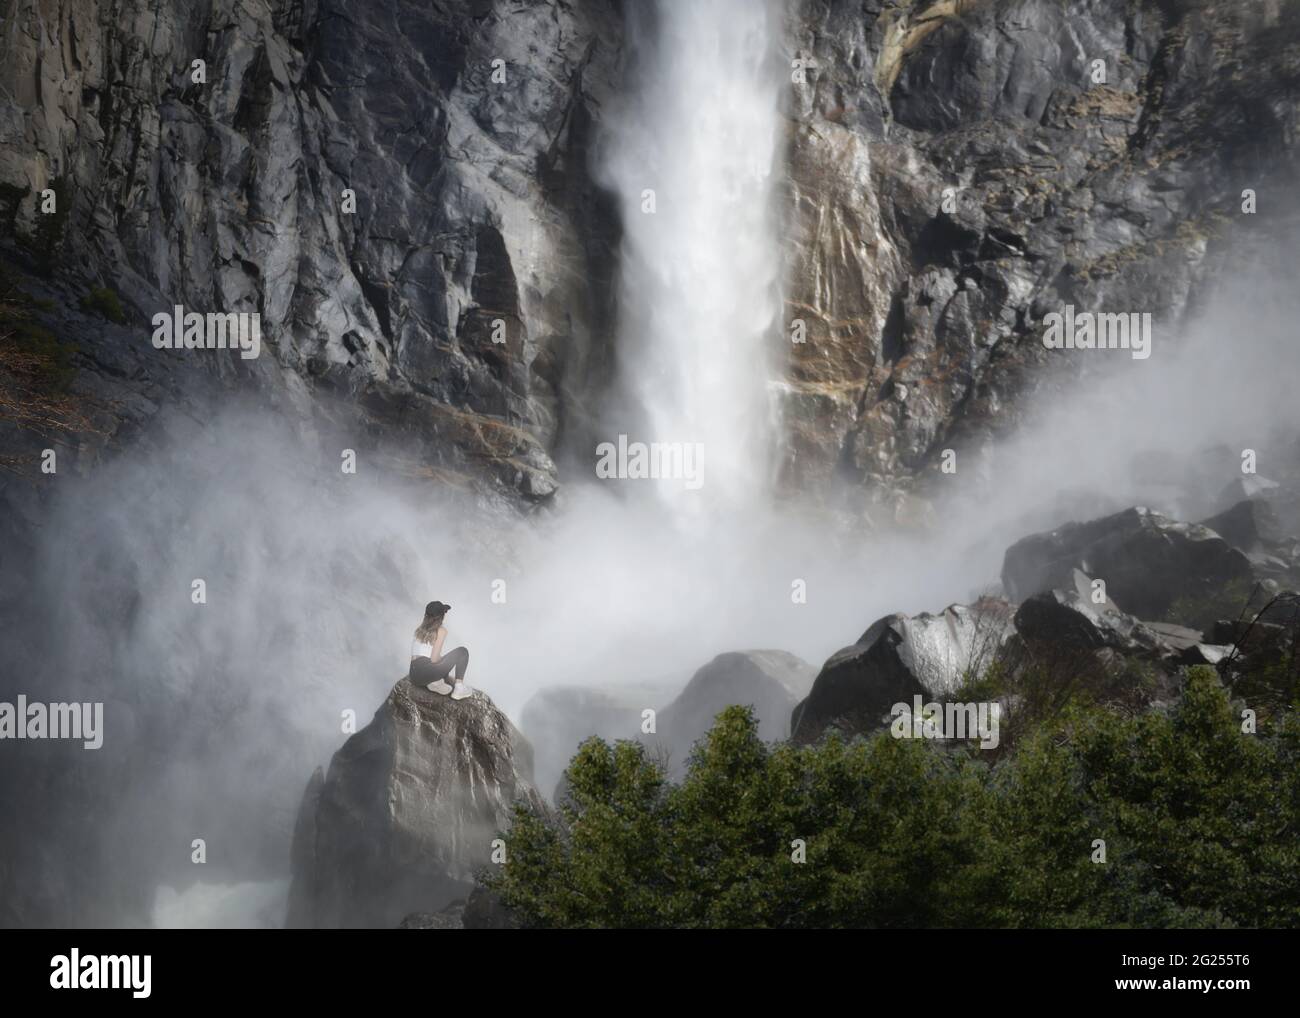 Woman sitting on a rock at the base of Bridalveil Fall, Yosemite National Park, California, USA Stock Photo